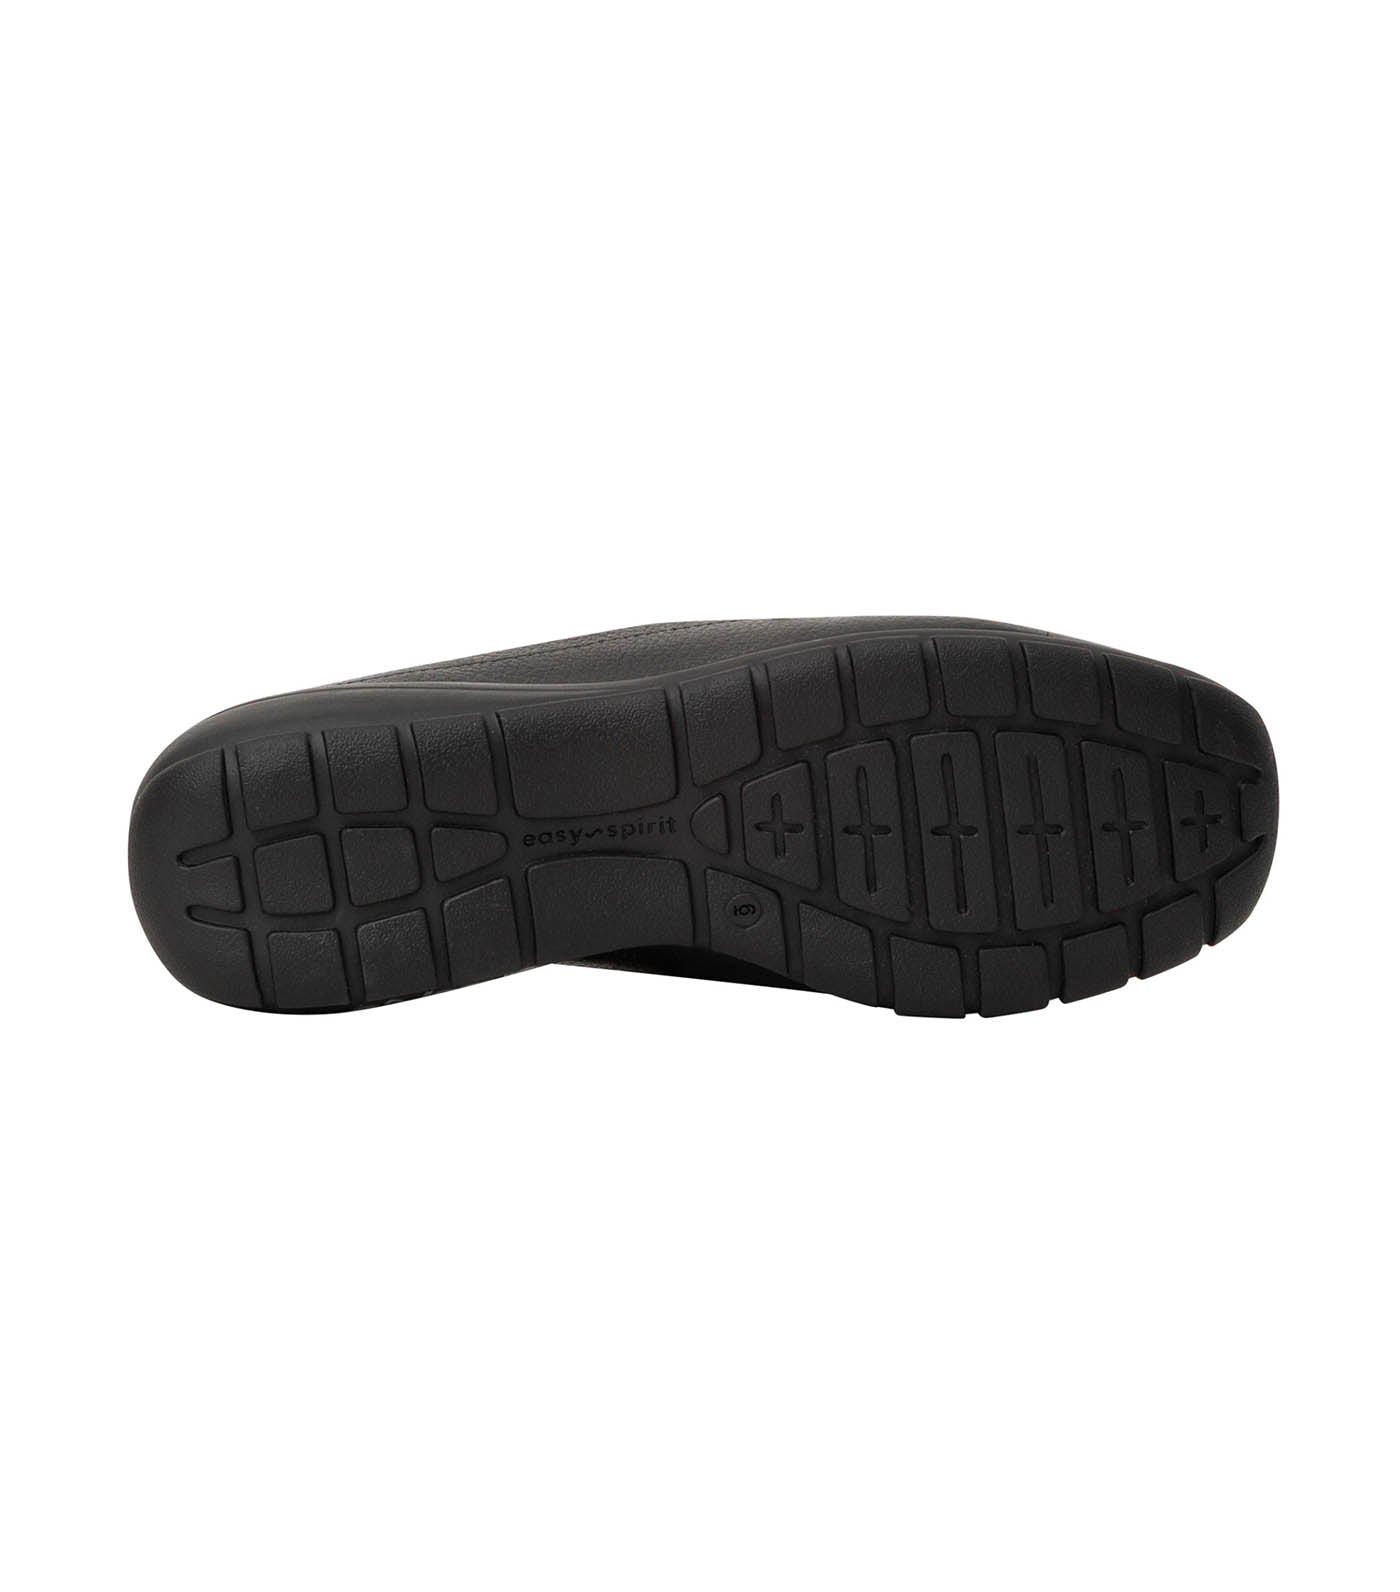 Aggie Slip-On Loafers Black